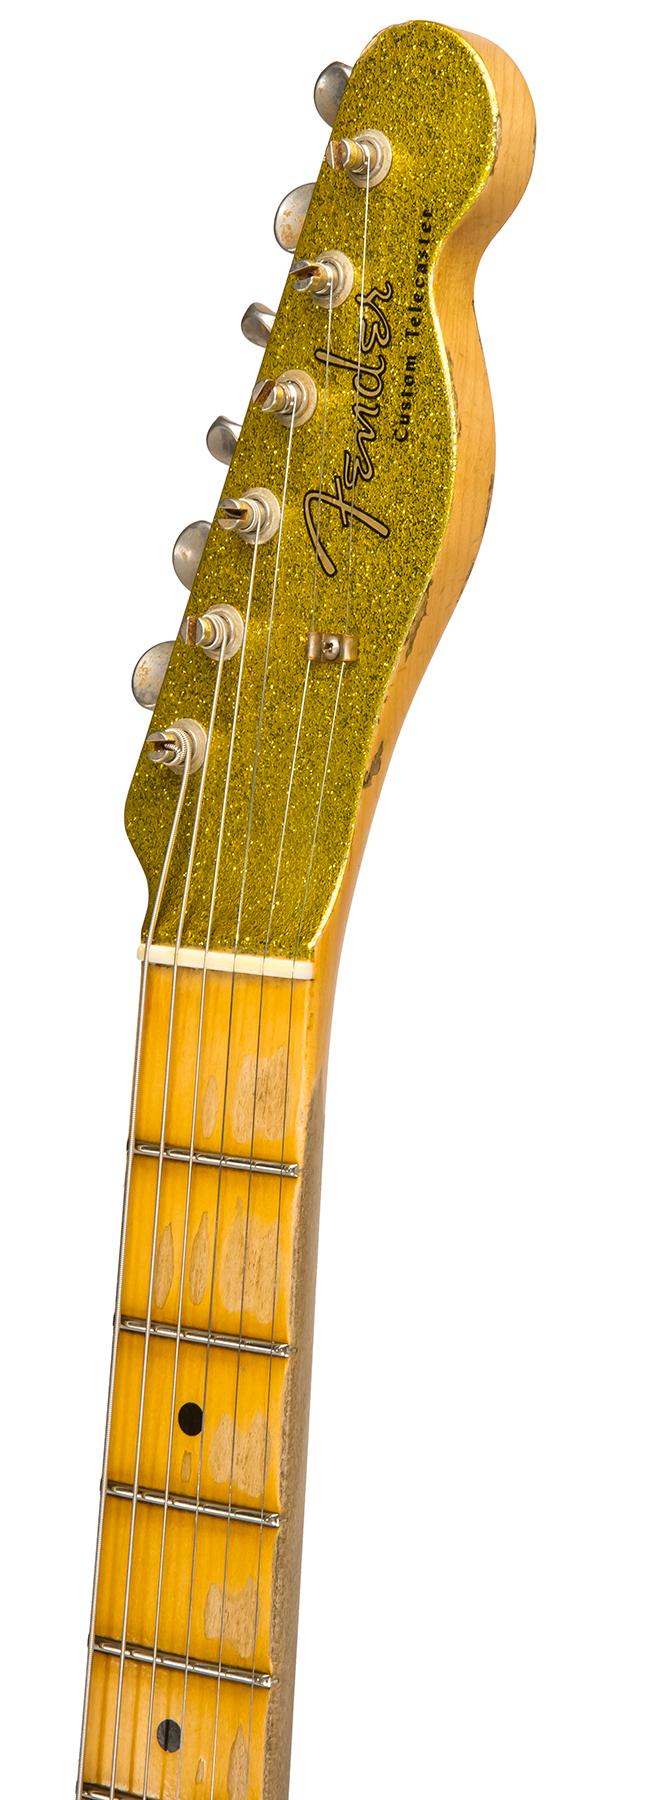 Fender Custom Shop Tele Custom 1963 2020 Ltd Rw #cz545983 - Relic Chartreuse Sparkle - Tel shape electric guitar - Variation 4